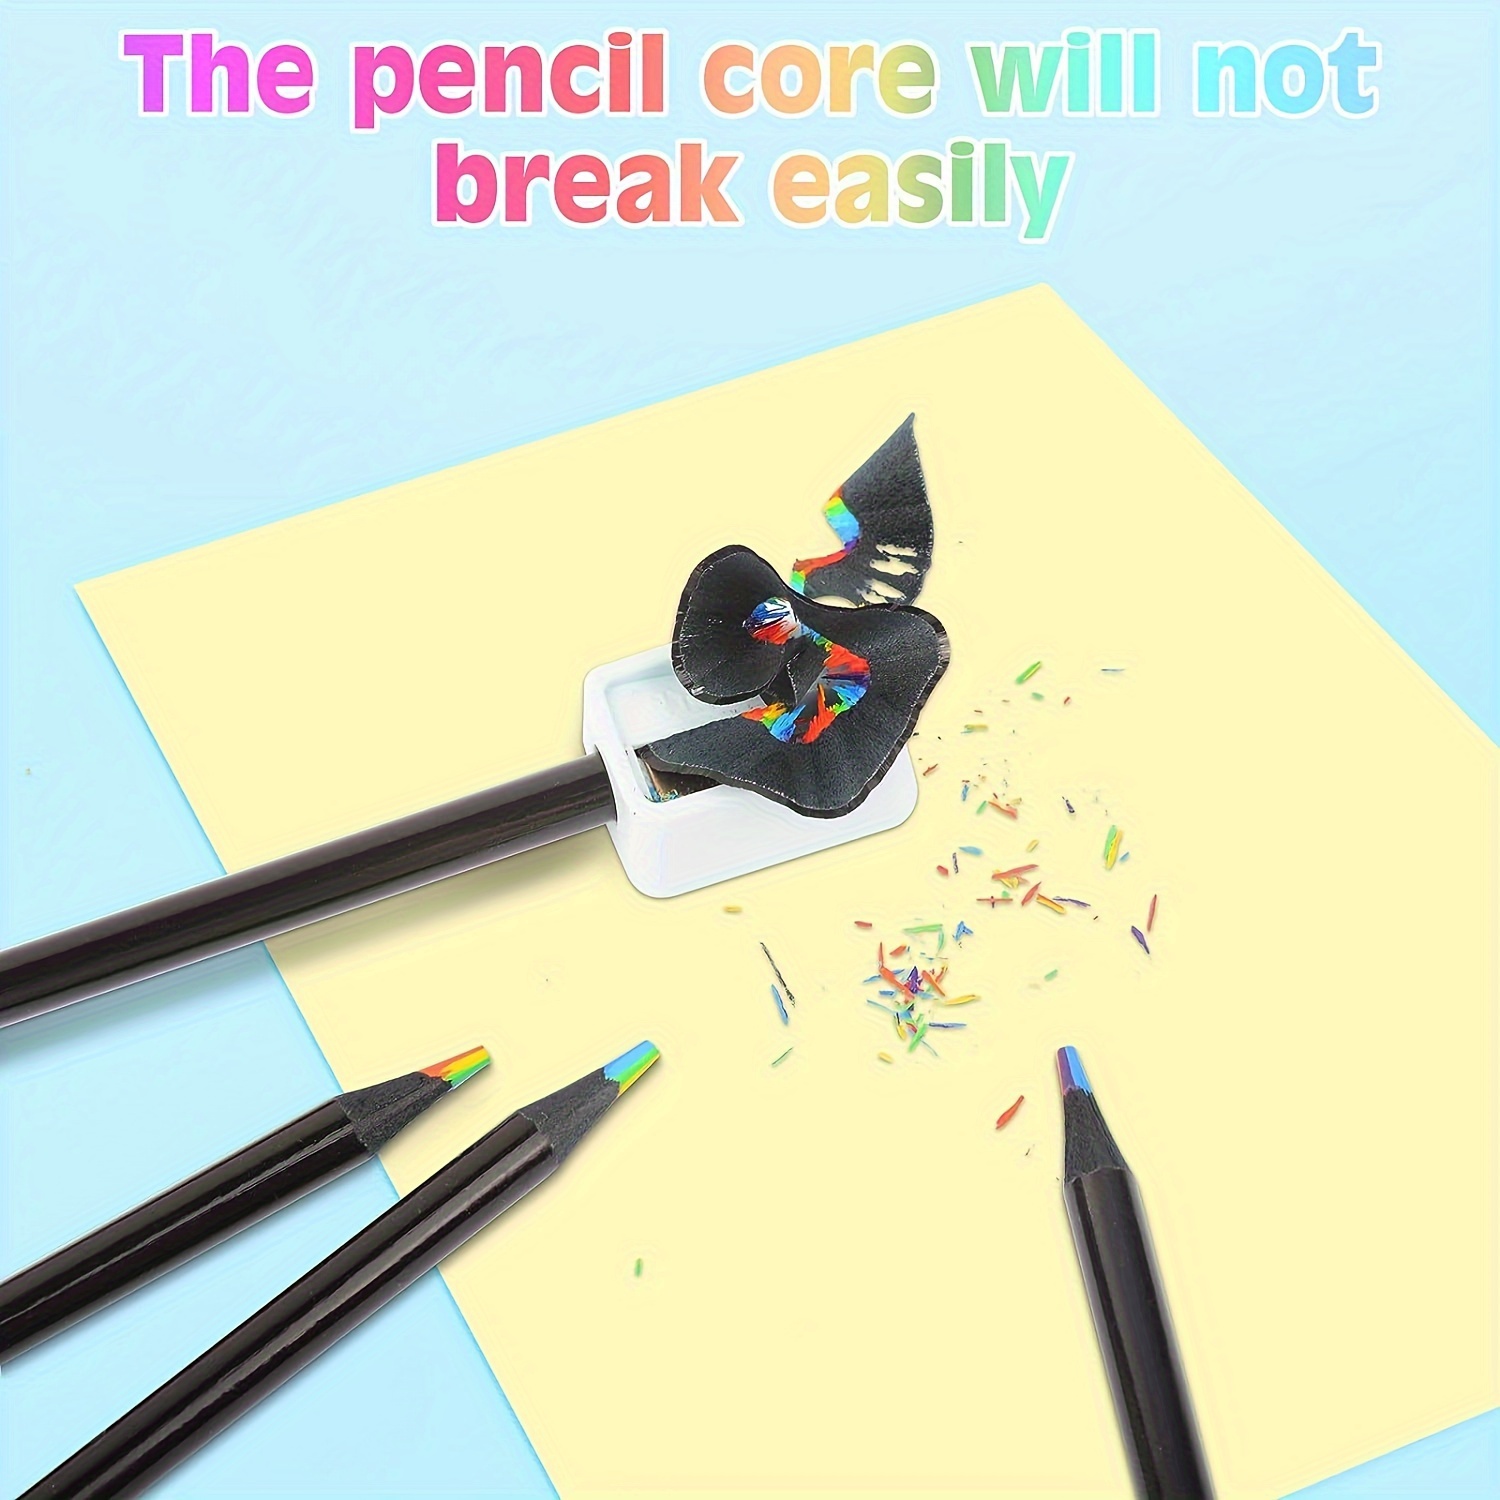 8pcs Rainbow Pencil, Wooden Colored Pencils Large Rainbow Pencils